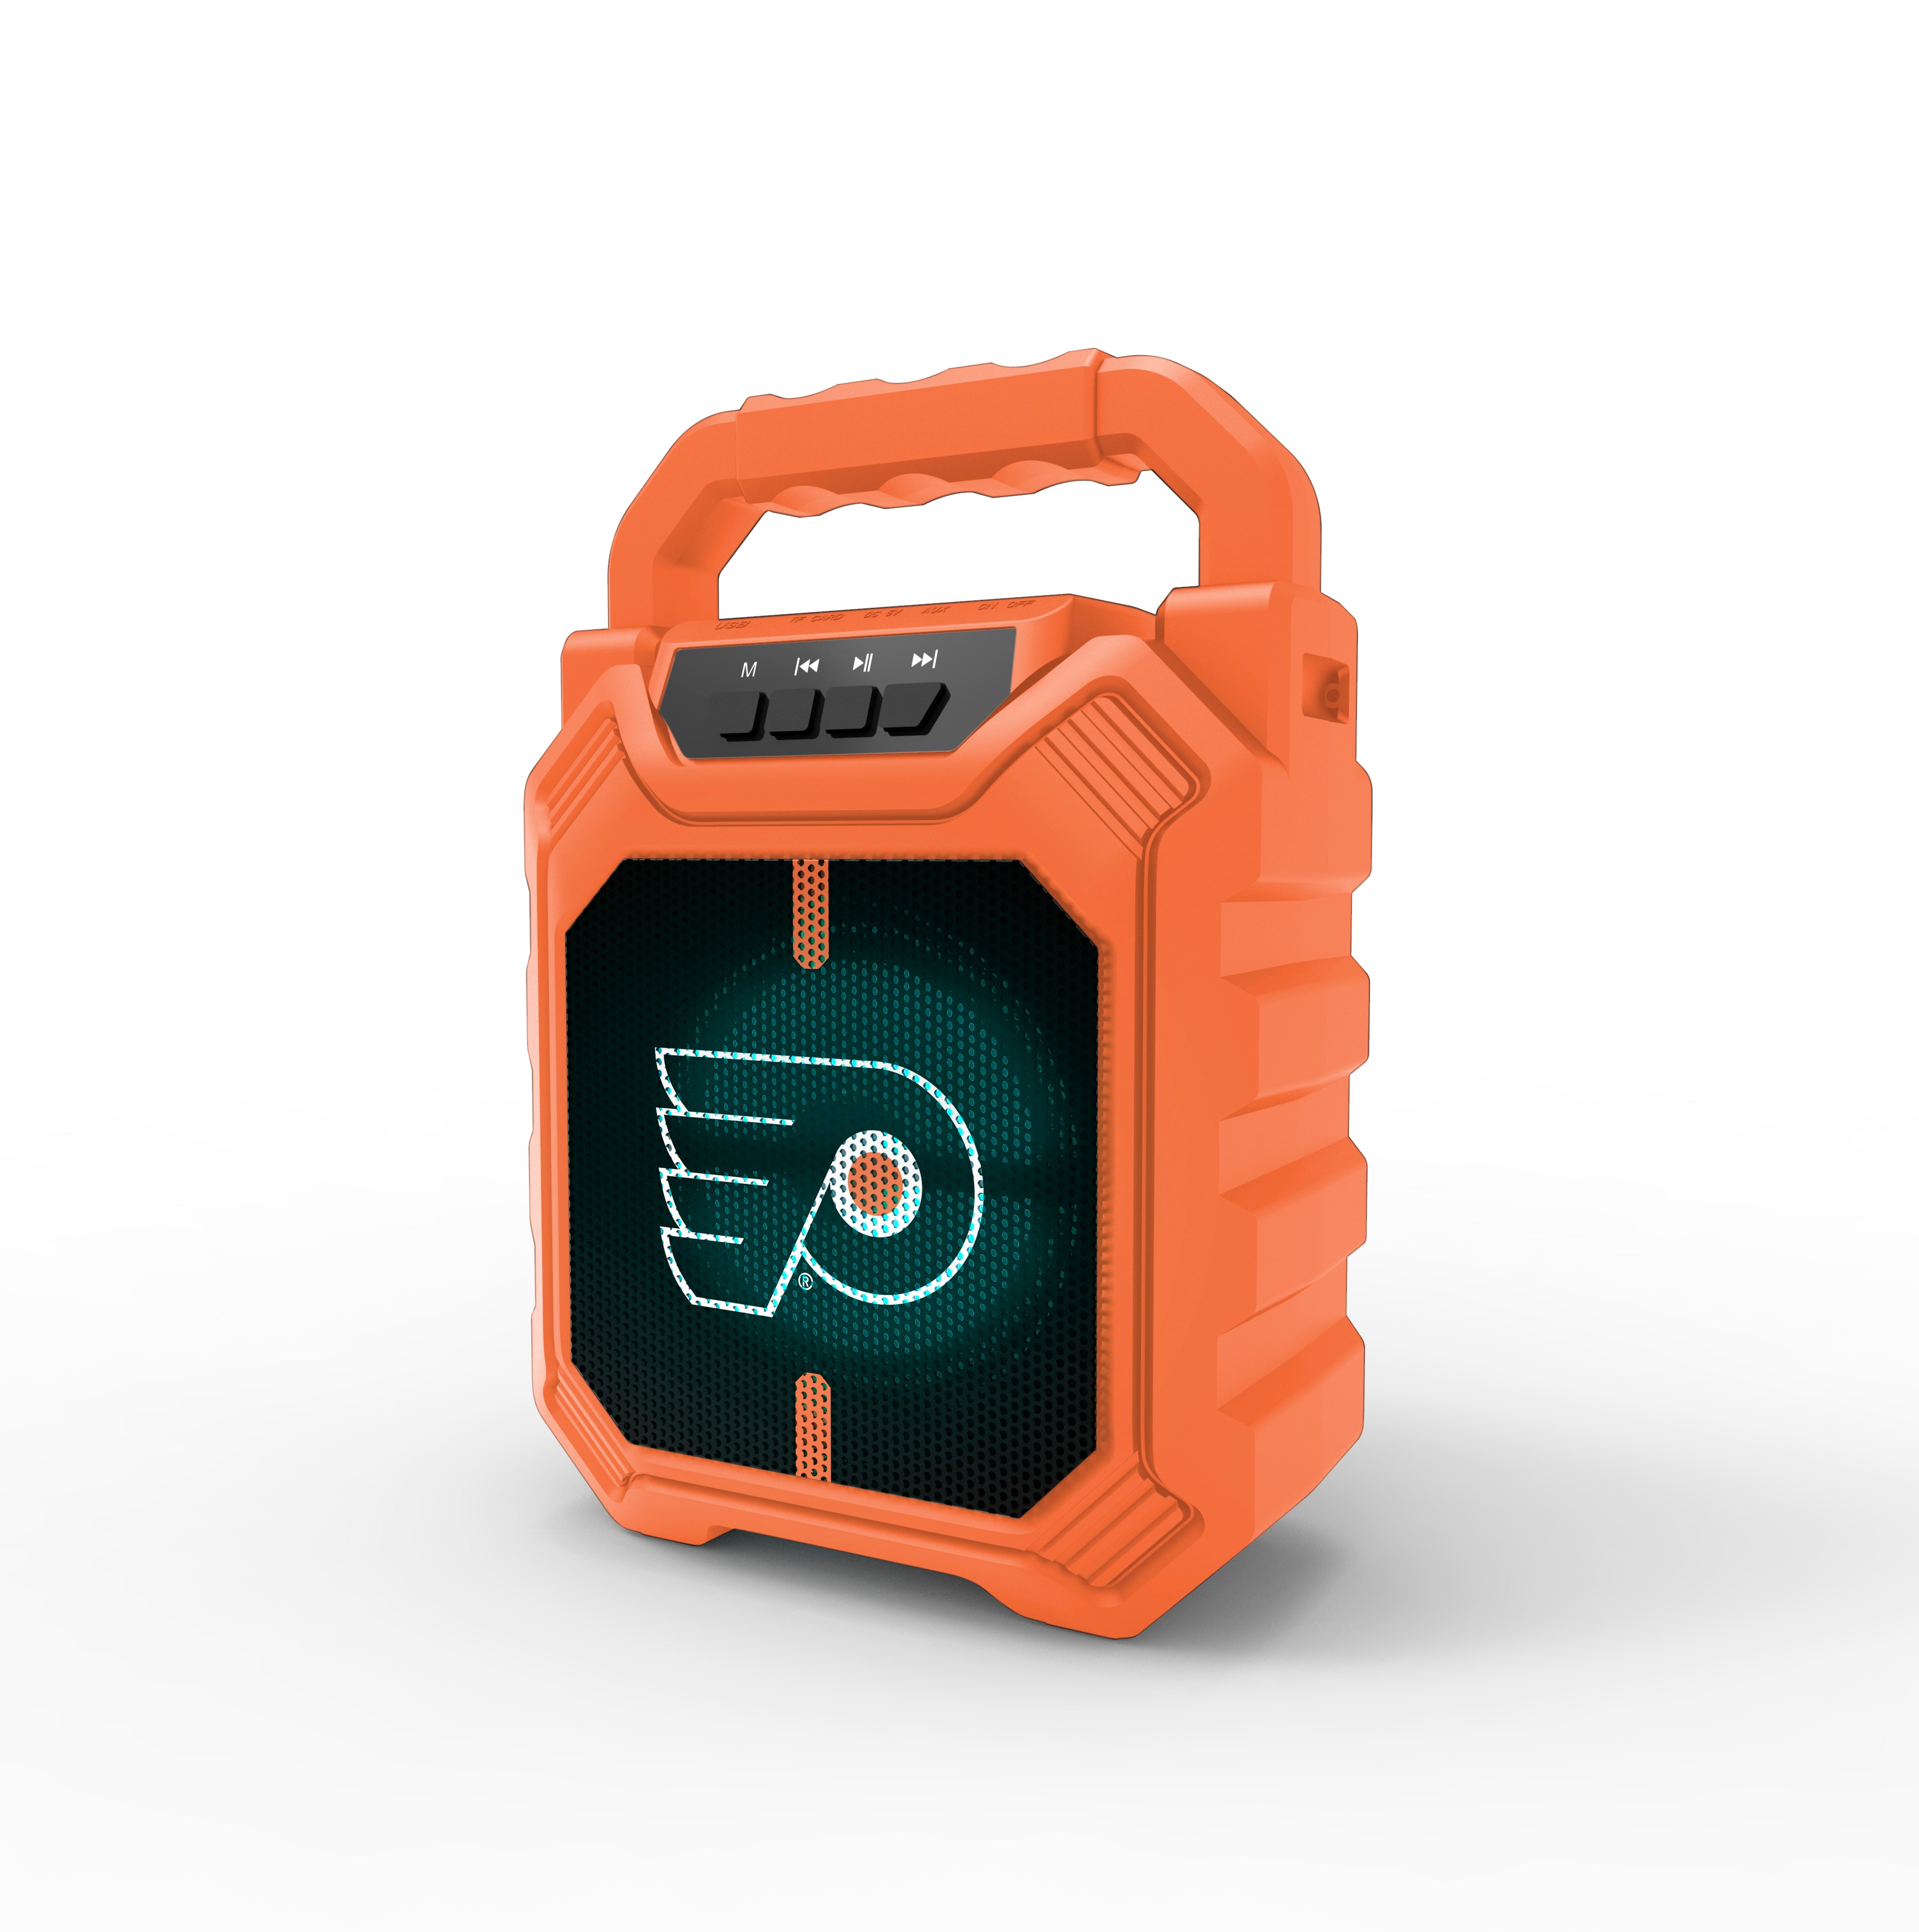 NHL Shockbox XL2 Bluetooth Speaker